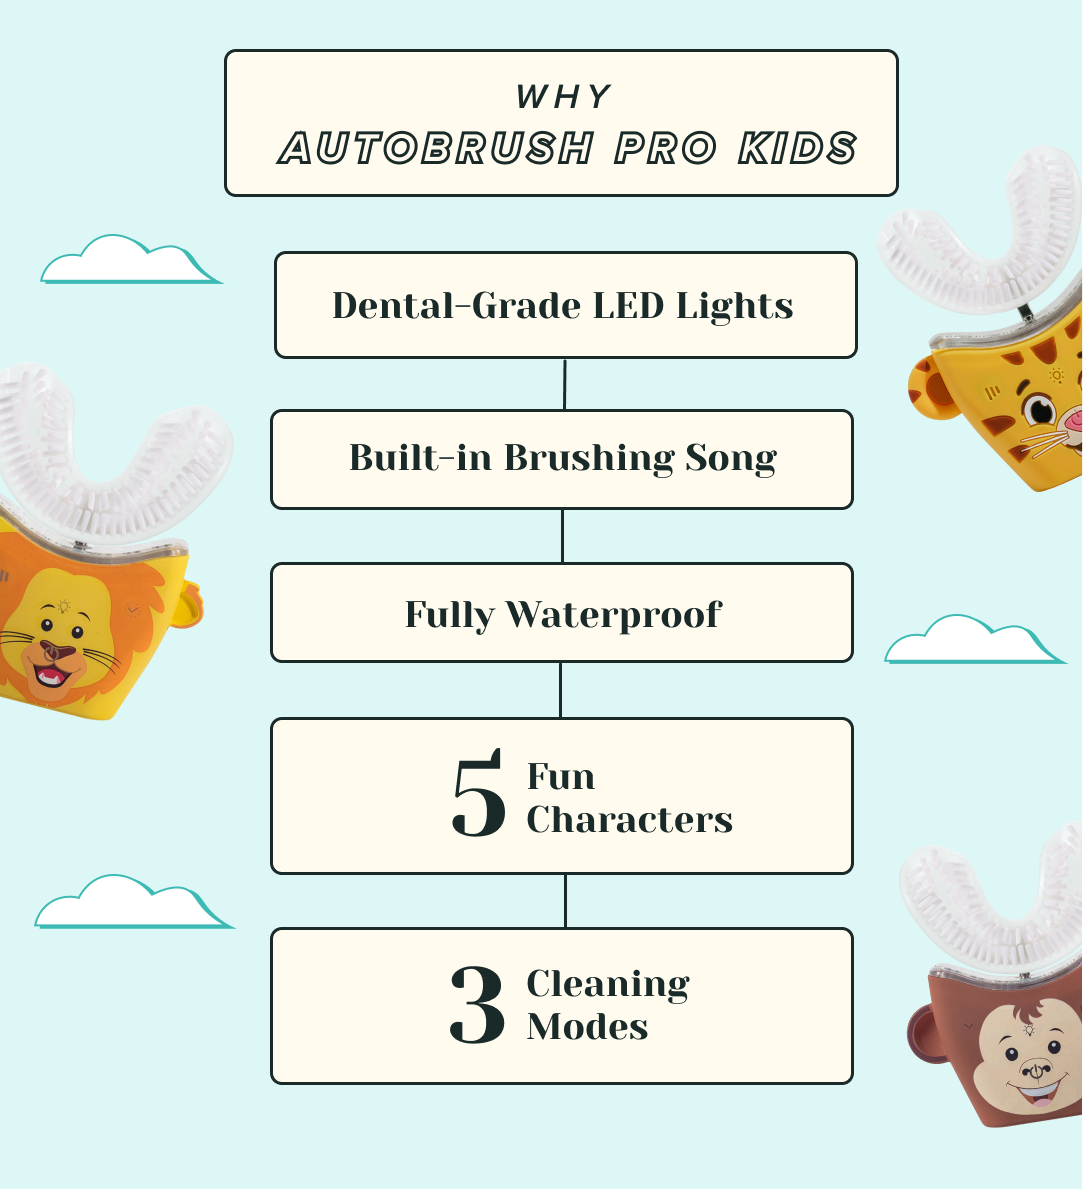 Why AutoBrush Pro Kids